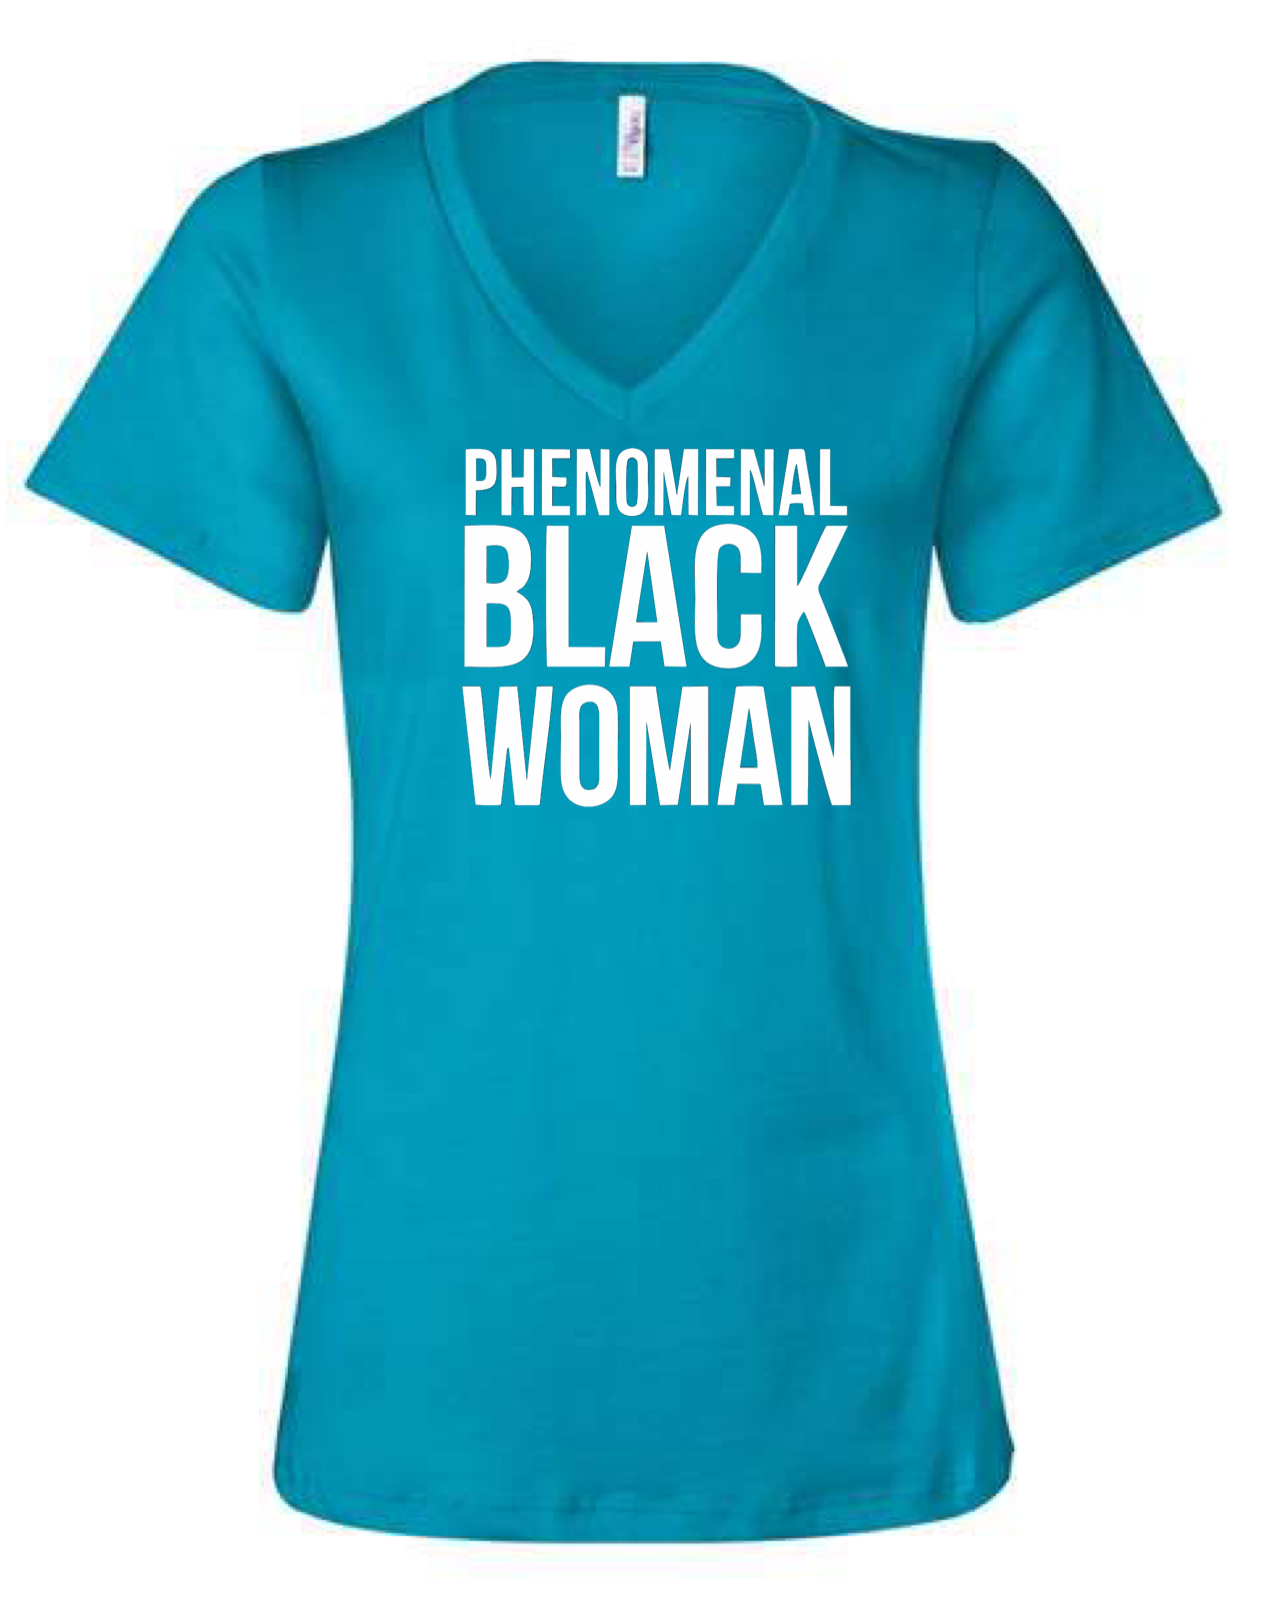 Phenomenal Black Woman Fitted V-Neck T-Shirt